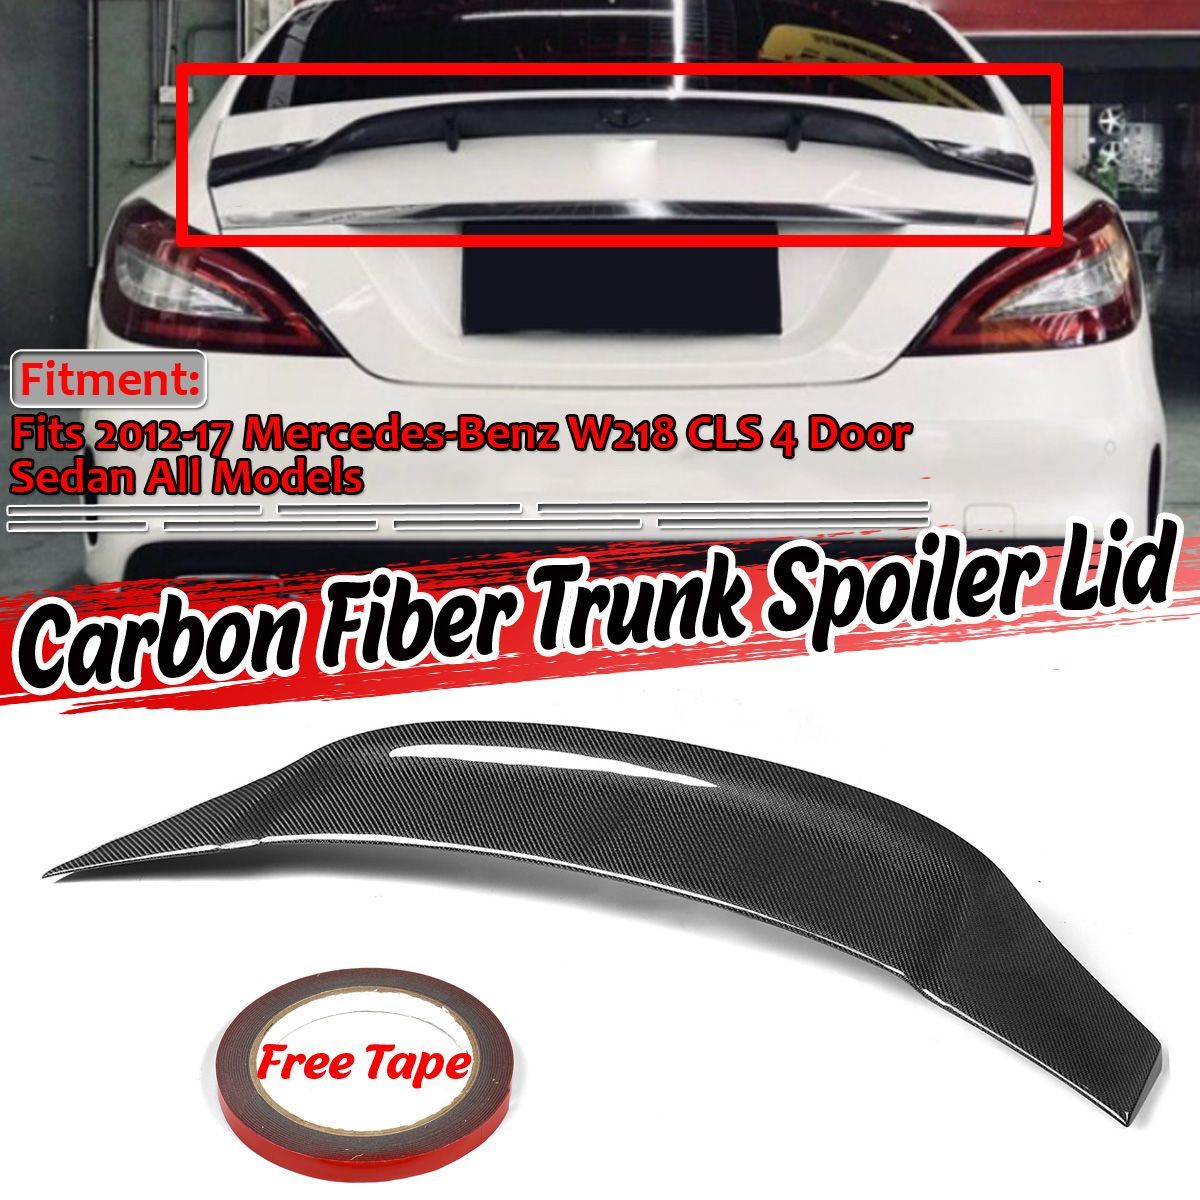 Real-Carbon-Fiber-Trunk-Spoiler-Lid-For-Mercedes-Benz-W218-CLS63-CLS500-CLS550-2012-2017-1672579